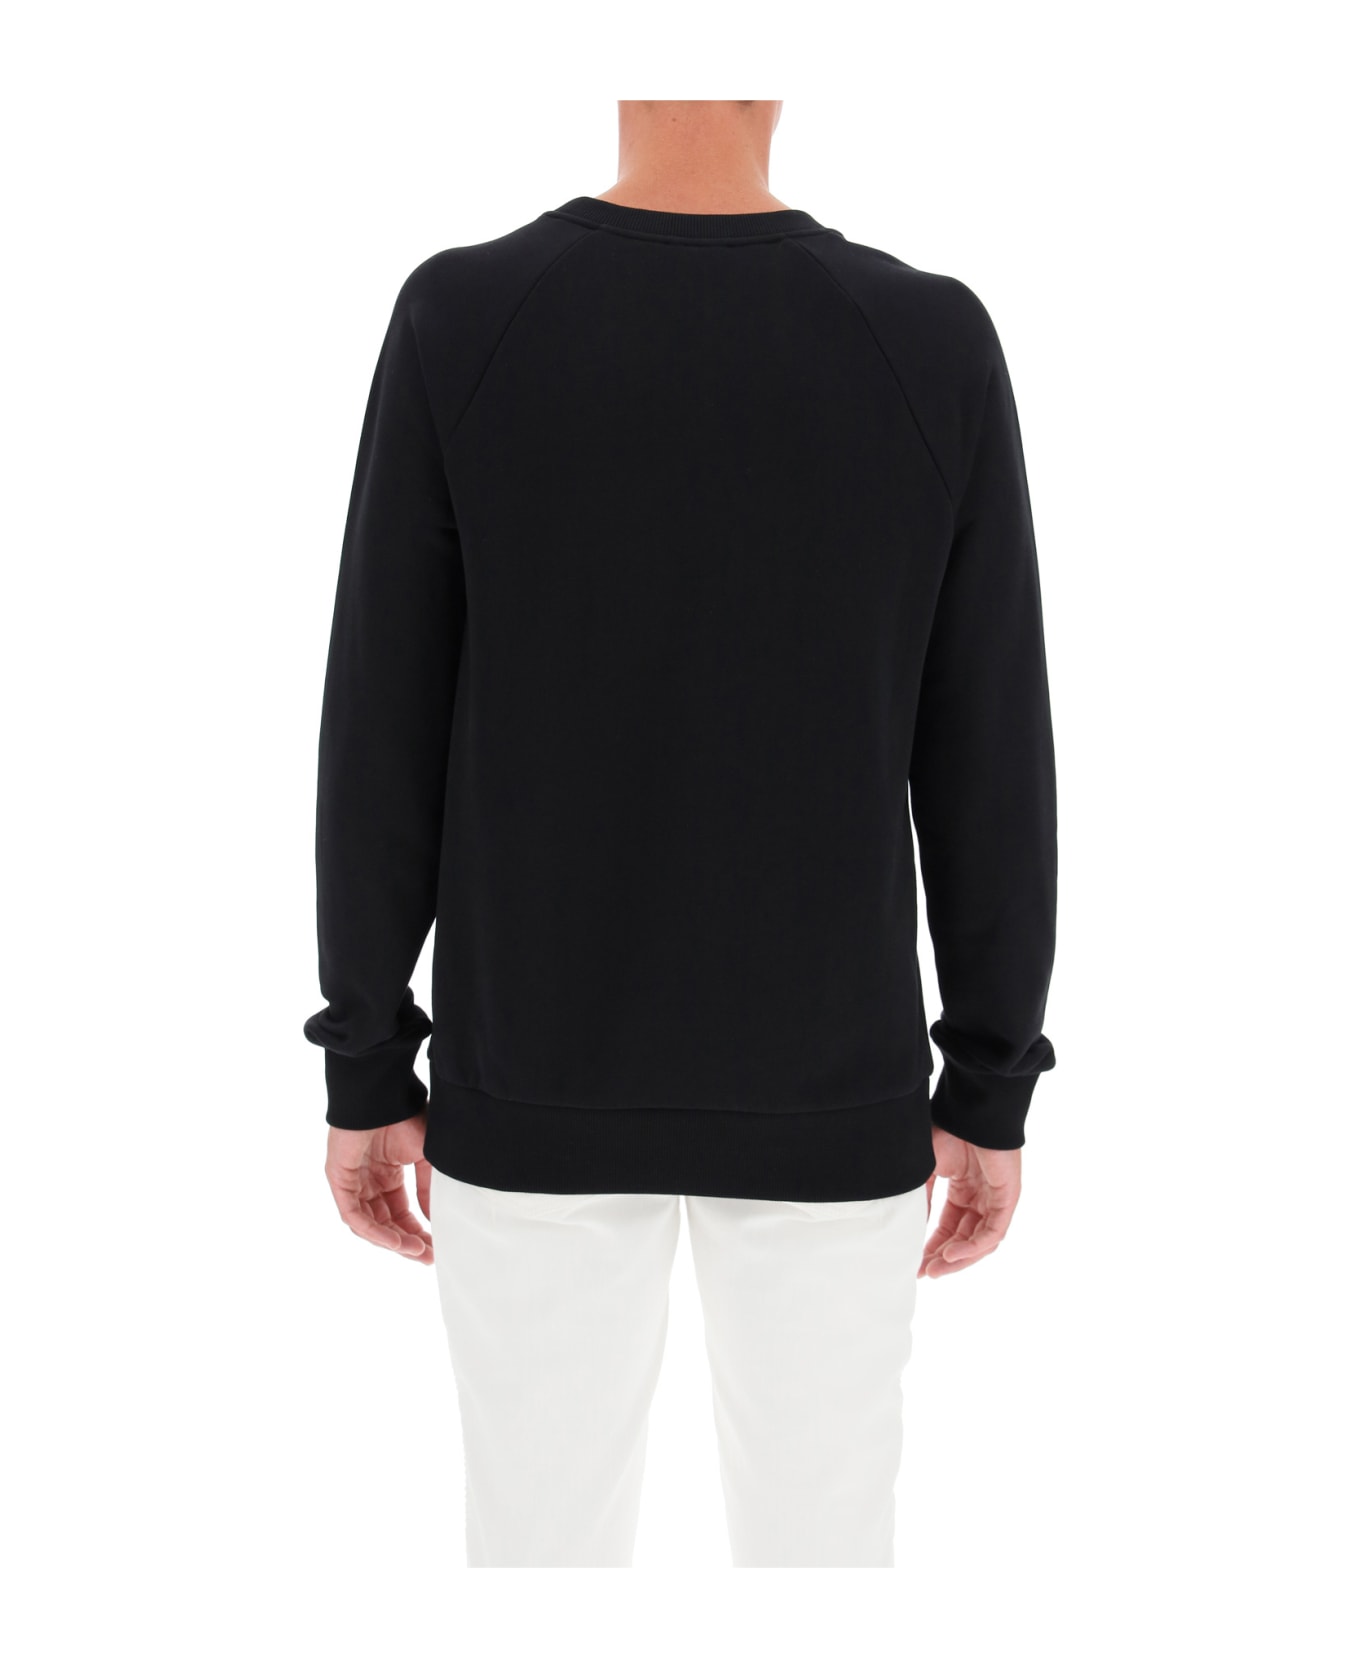 Balmain Logo Print Sweatshirt - Nero/bianco フリース